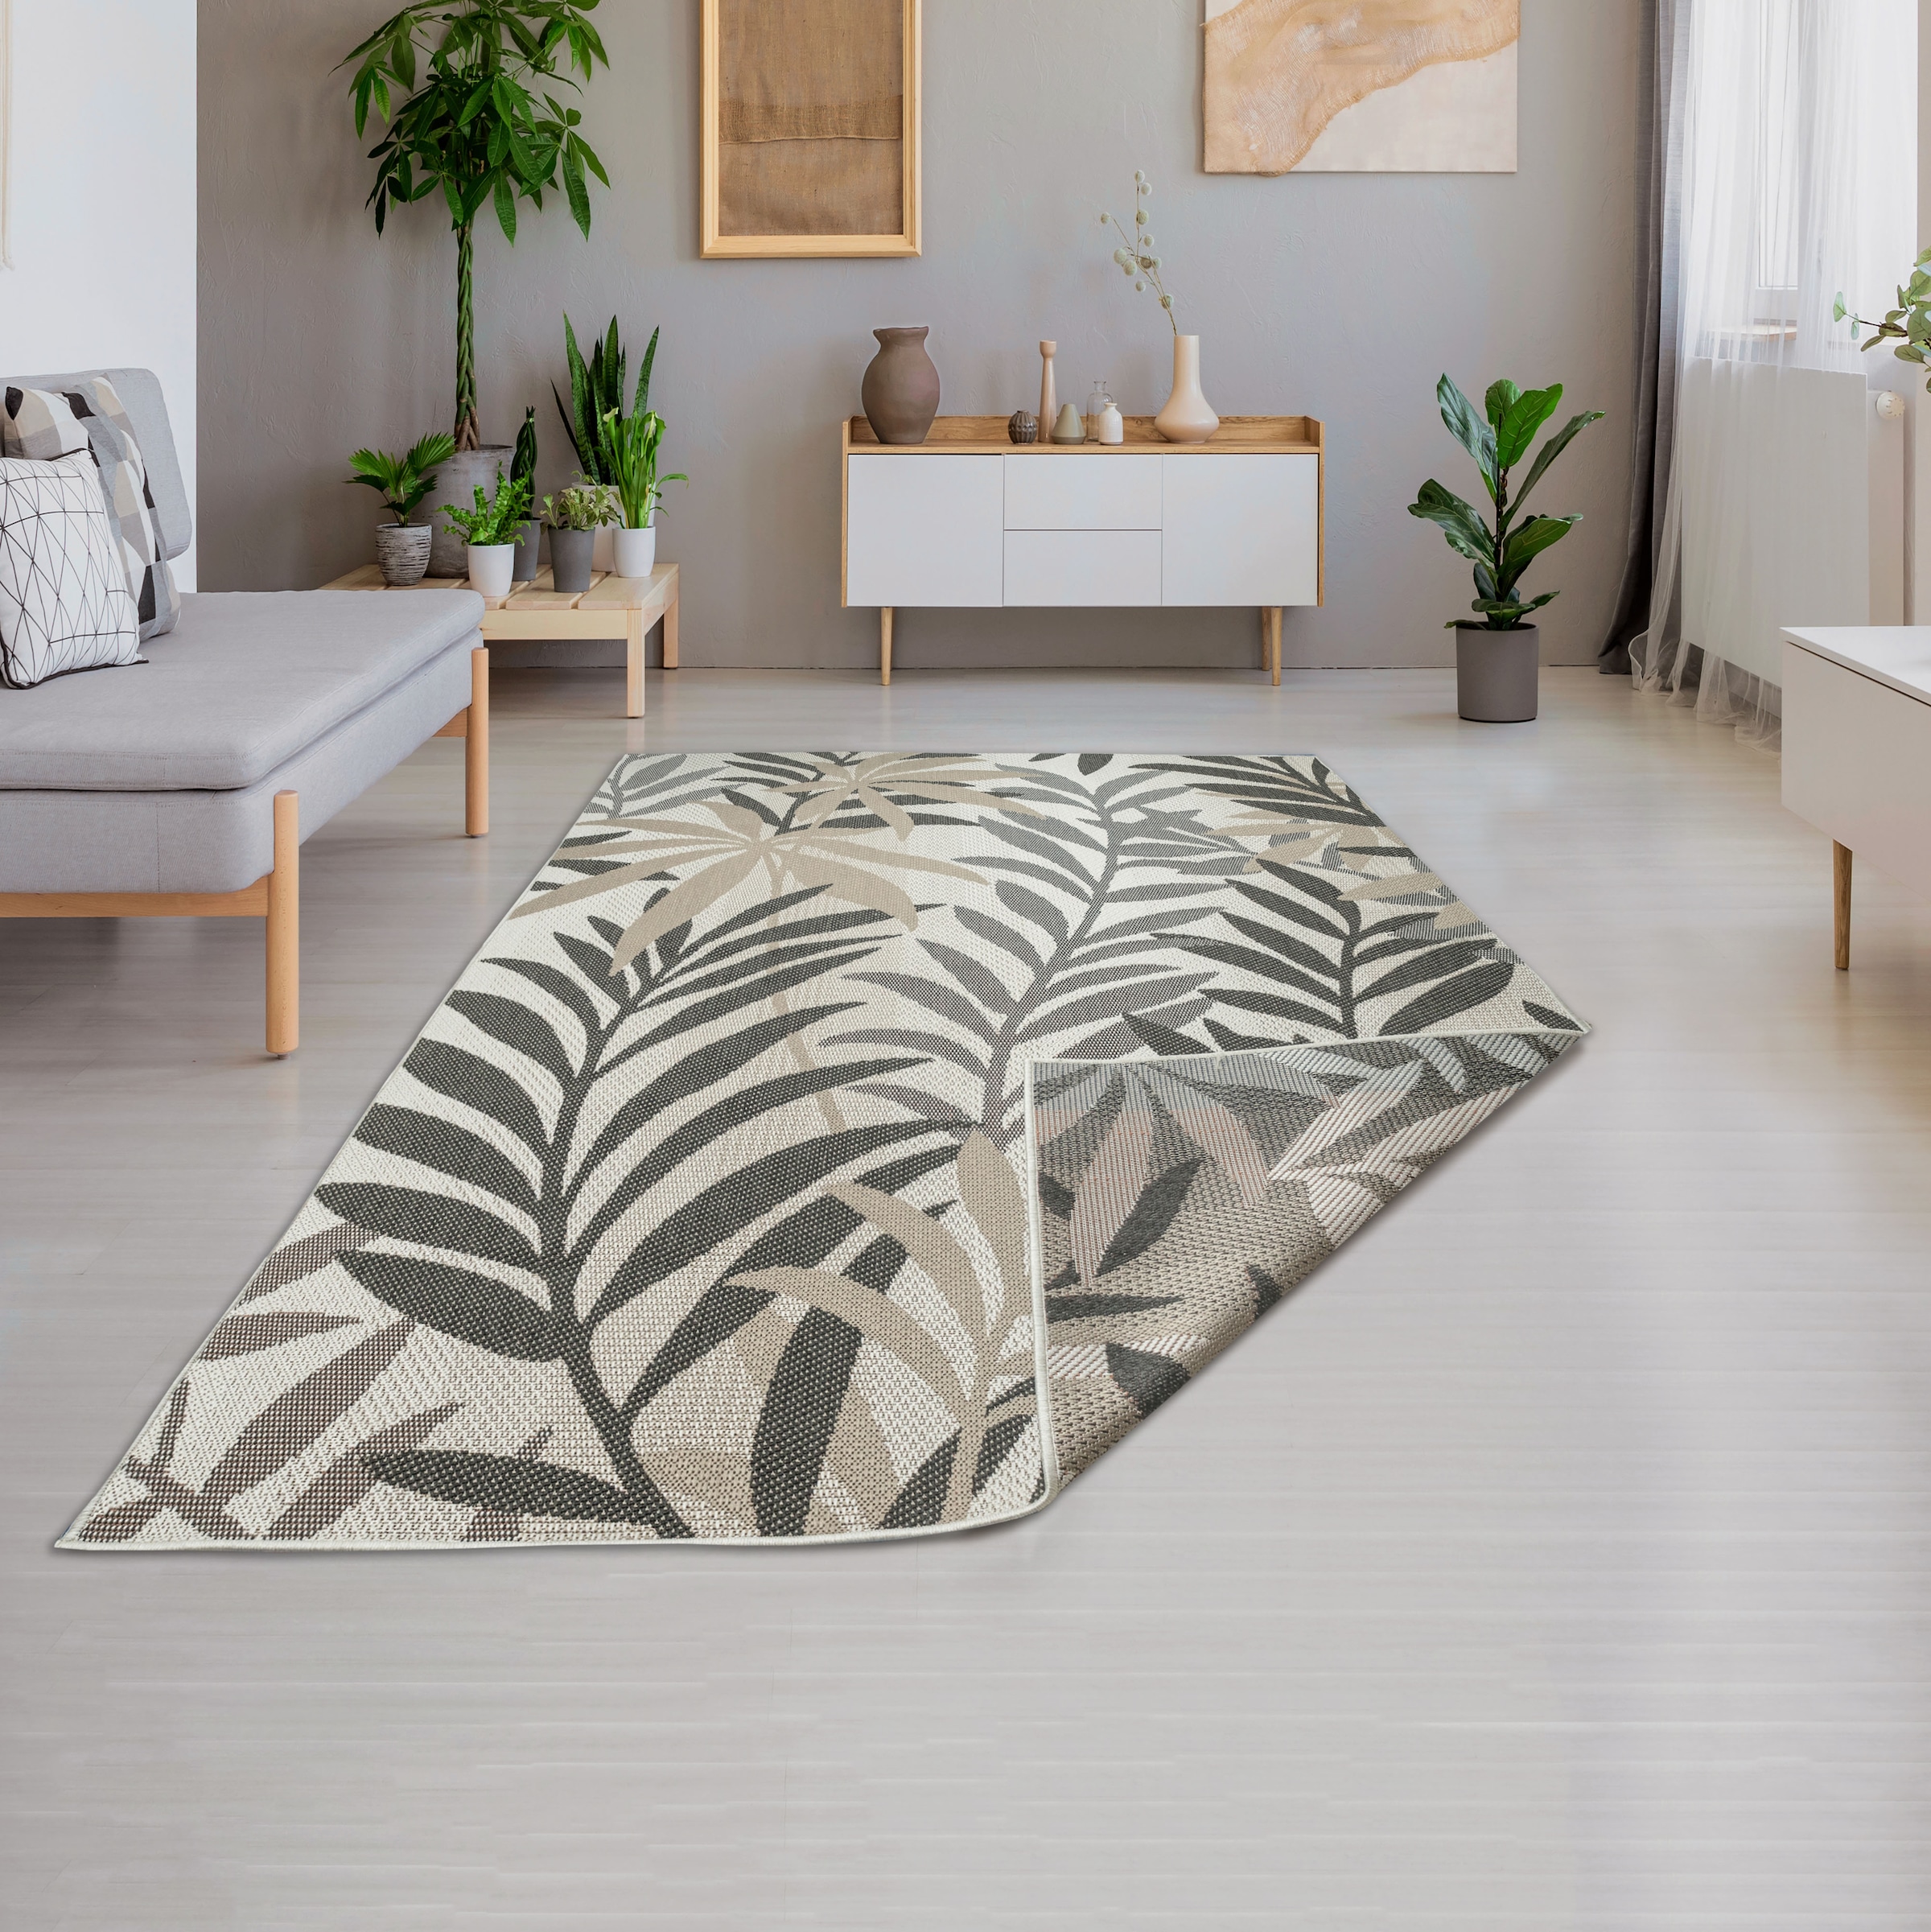 Guido Maria Kretschmer Home&Living Teppich »Jungel«, rechteckig, 5 mm Höhe,  In- und Outdoor geeignet,